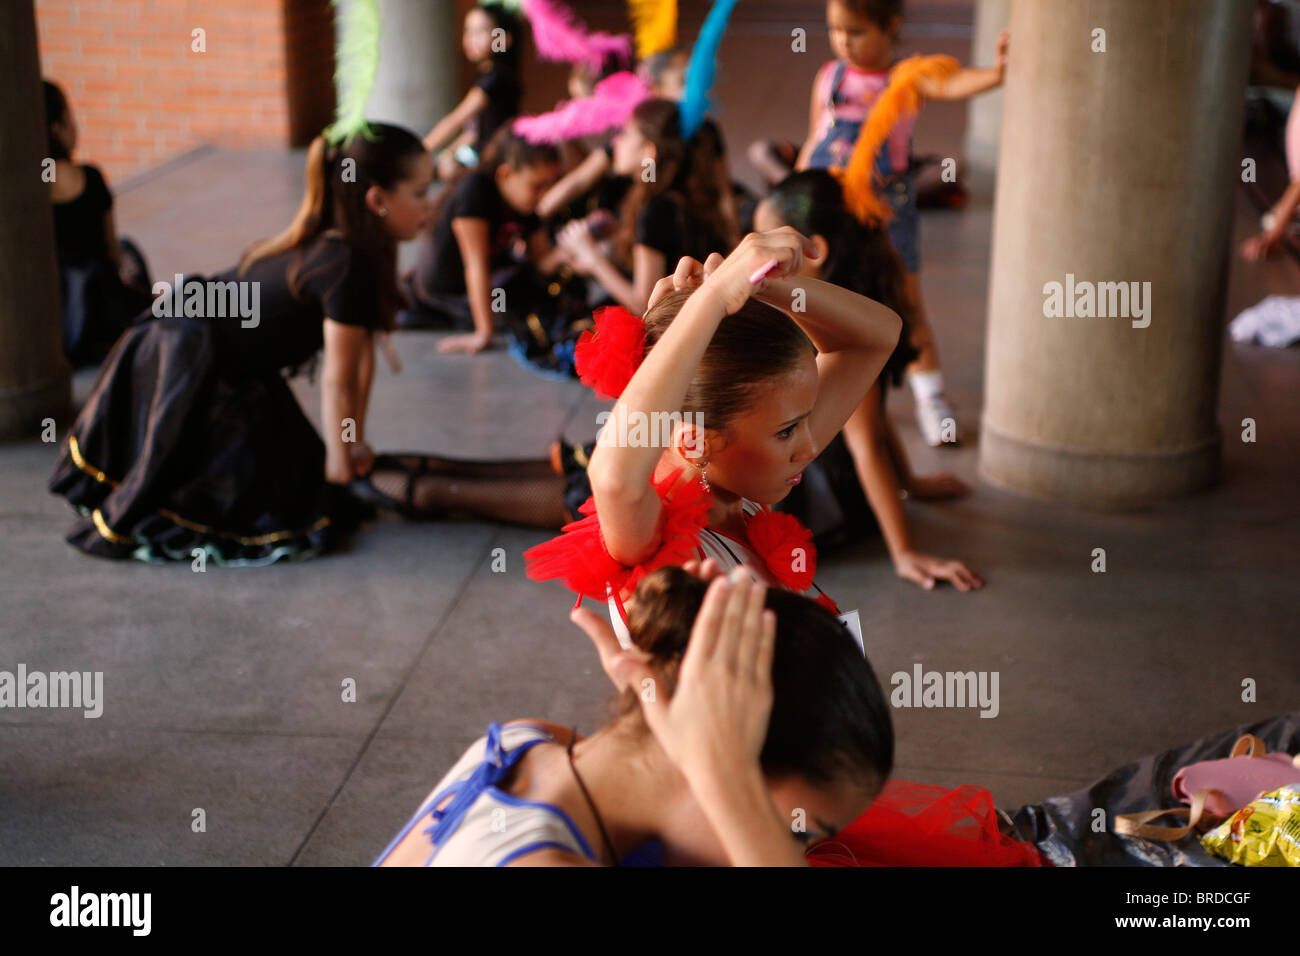 School children, 8-10 years old girls prepare for dancing presentation. Nova Iguaçú, Rio de Janeiro, Brazil. Stock Photo